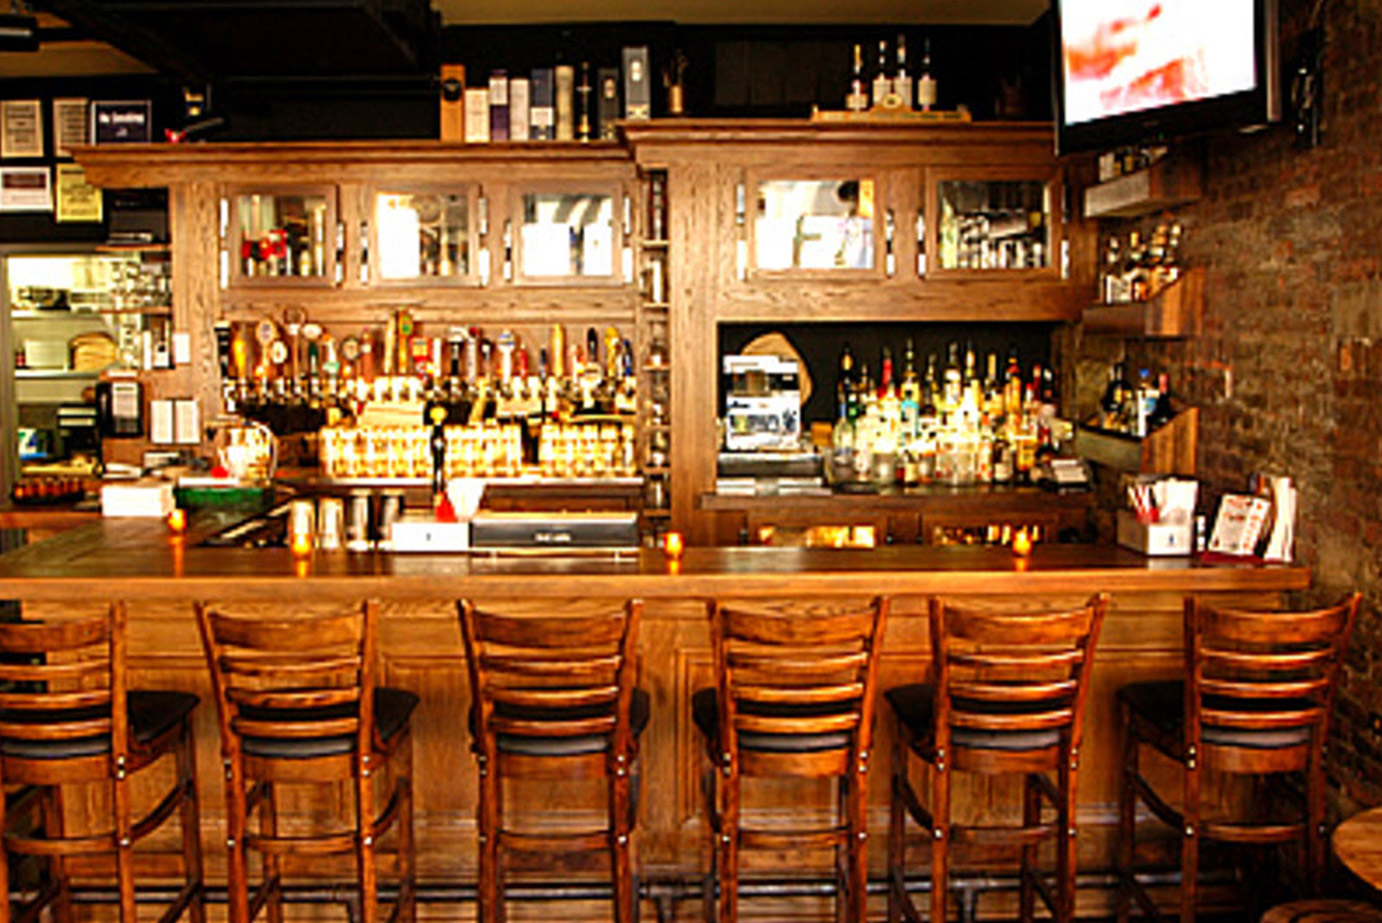 The Half Pint interior bar